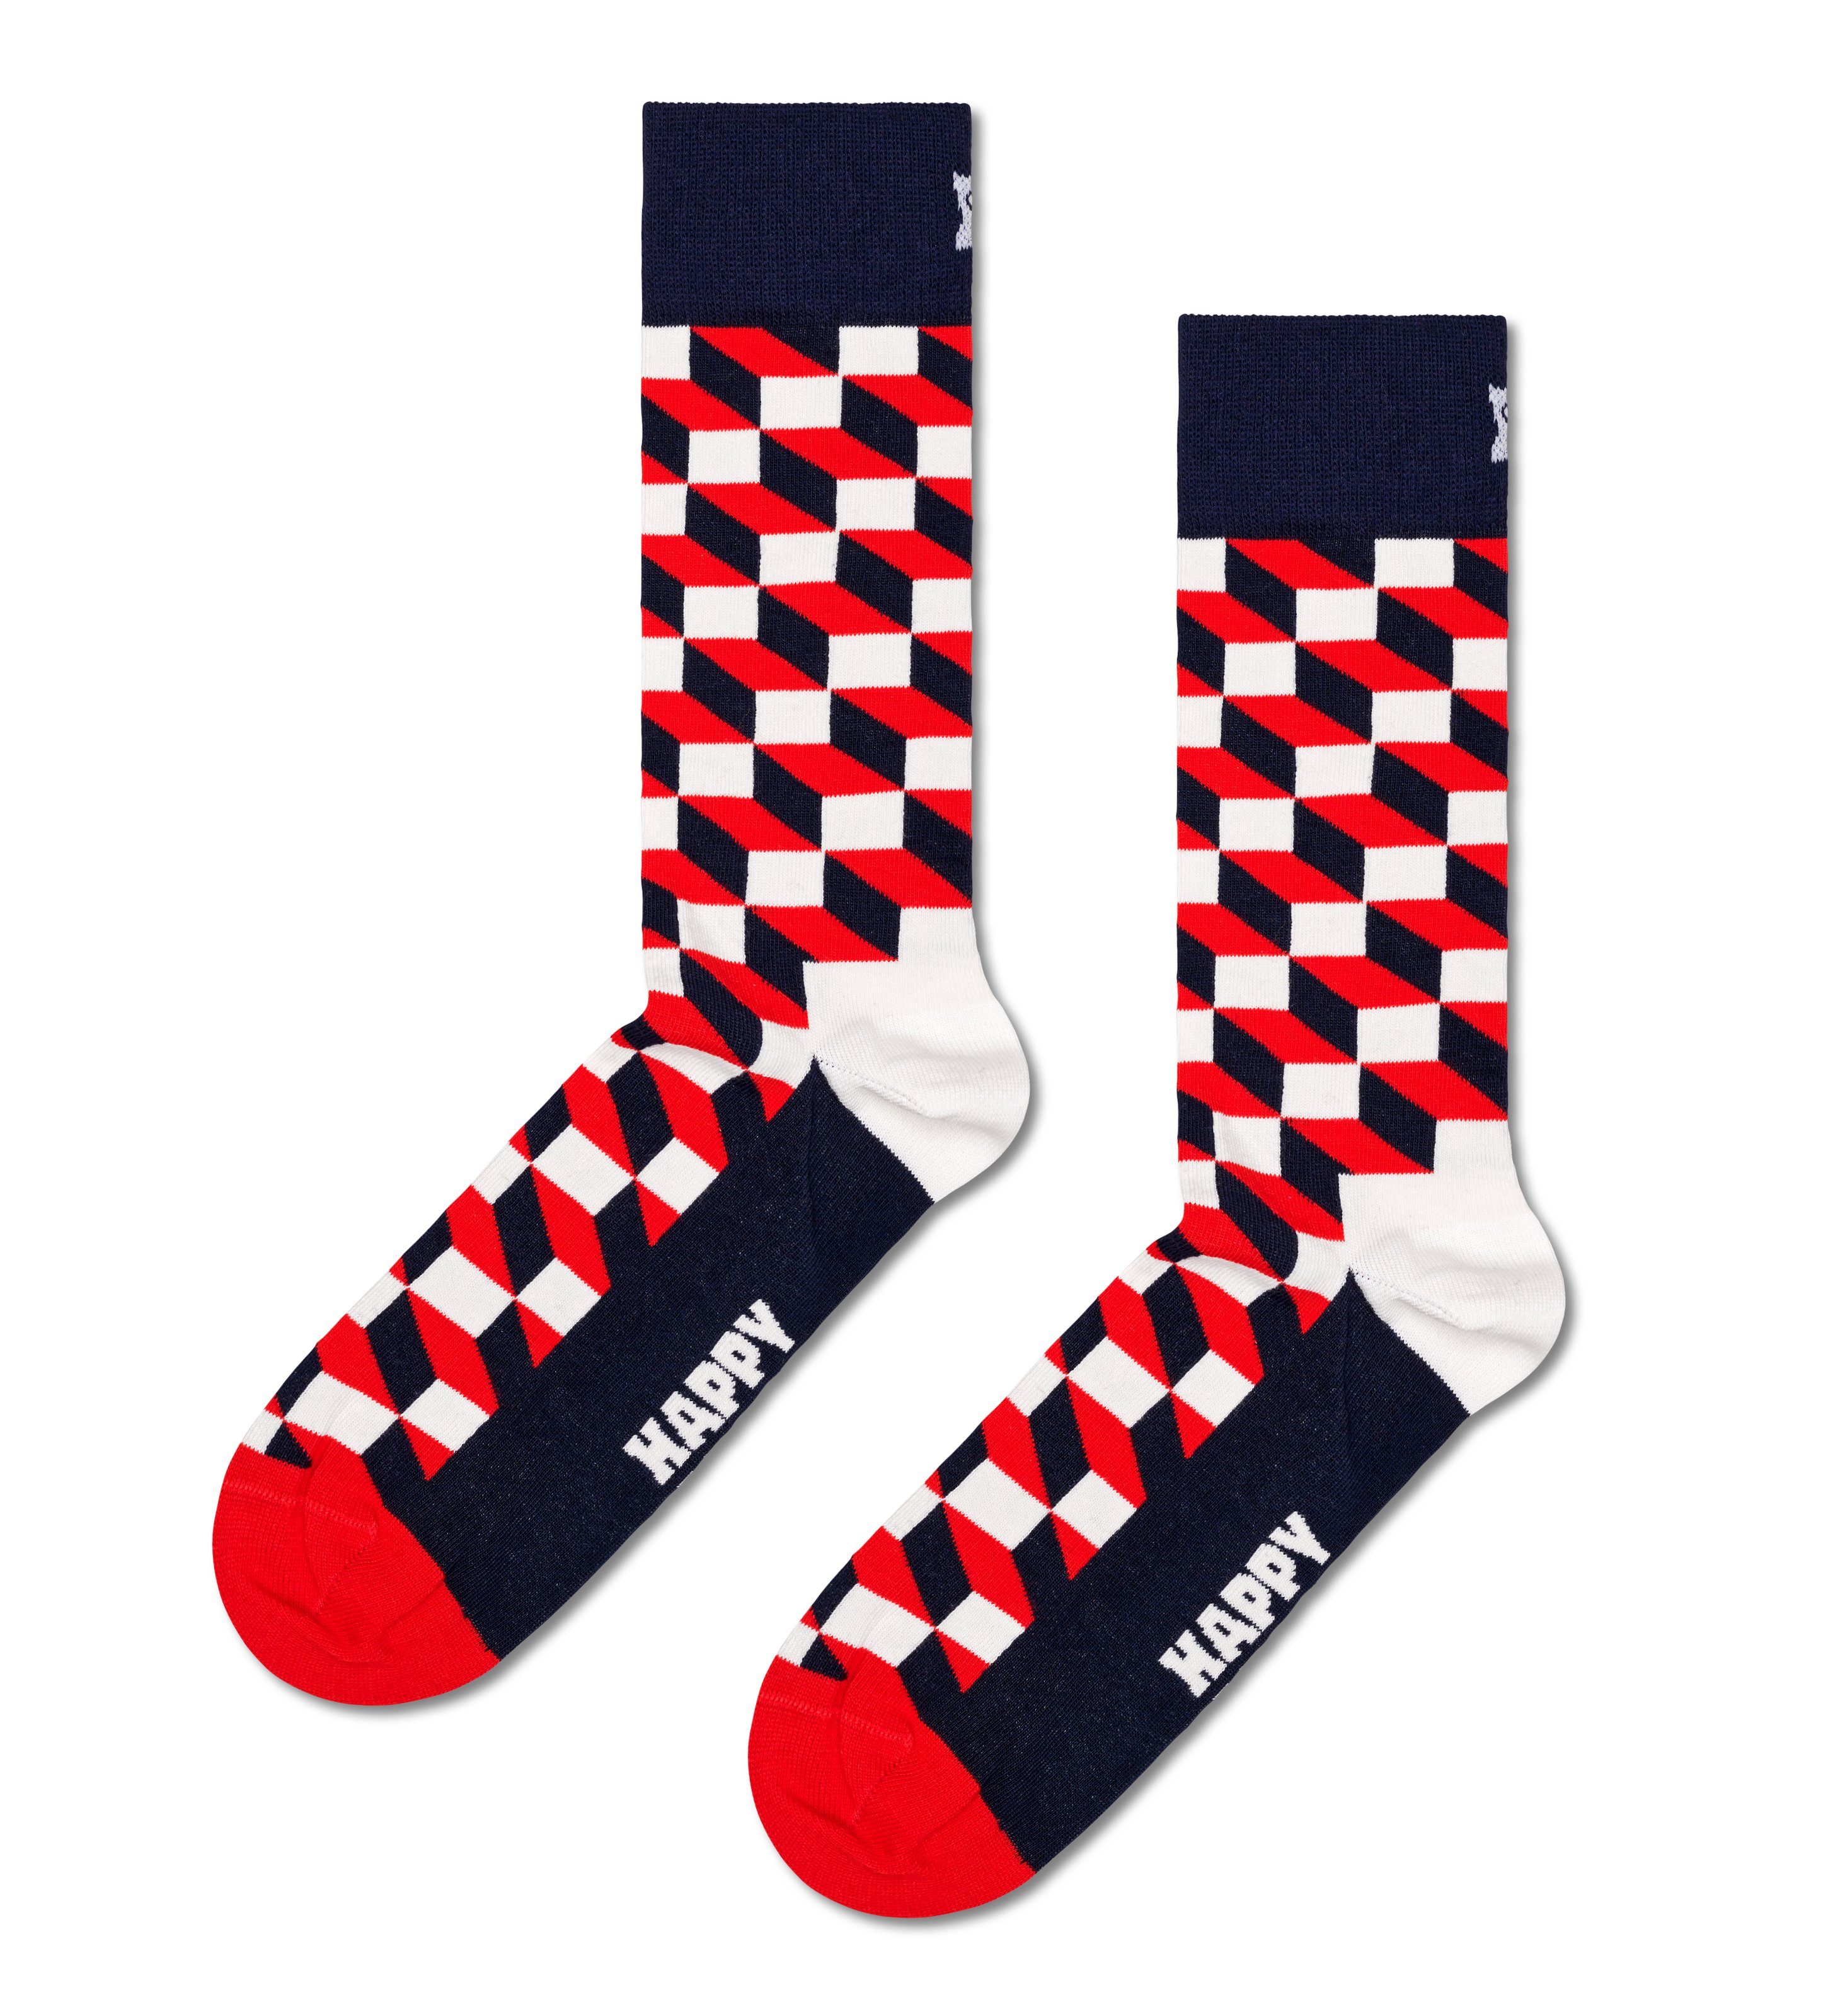 4-Pack 2 Socks 4-Paar) & Happy Classic Classic (Packung, Dots Set Gift Socken Stripes Socks Navy Navy